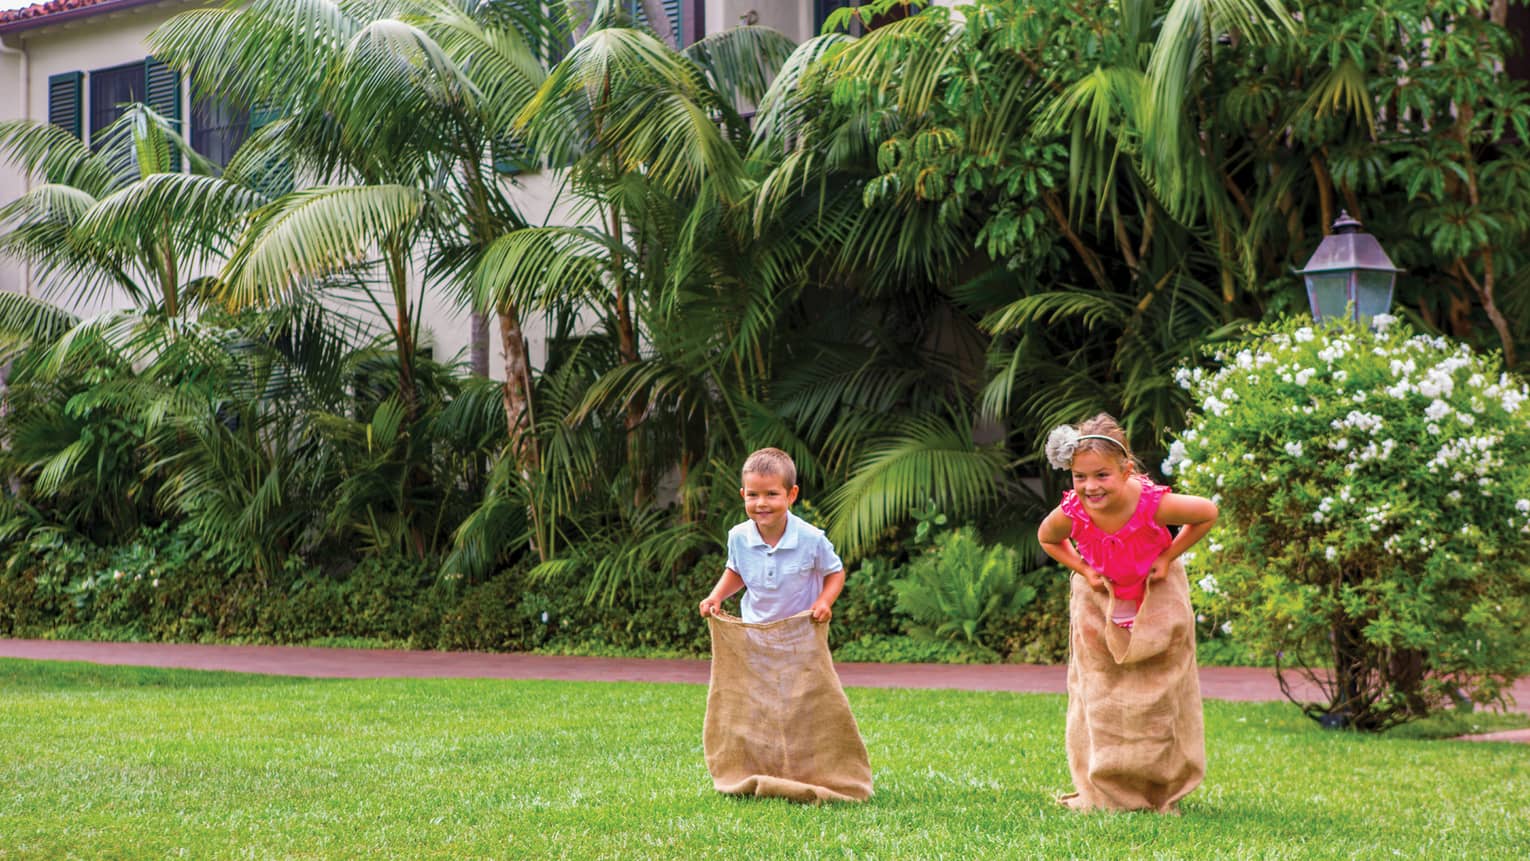 Two smiling children race across lawn in burlap sacks